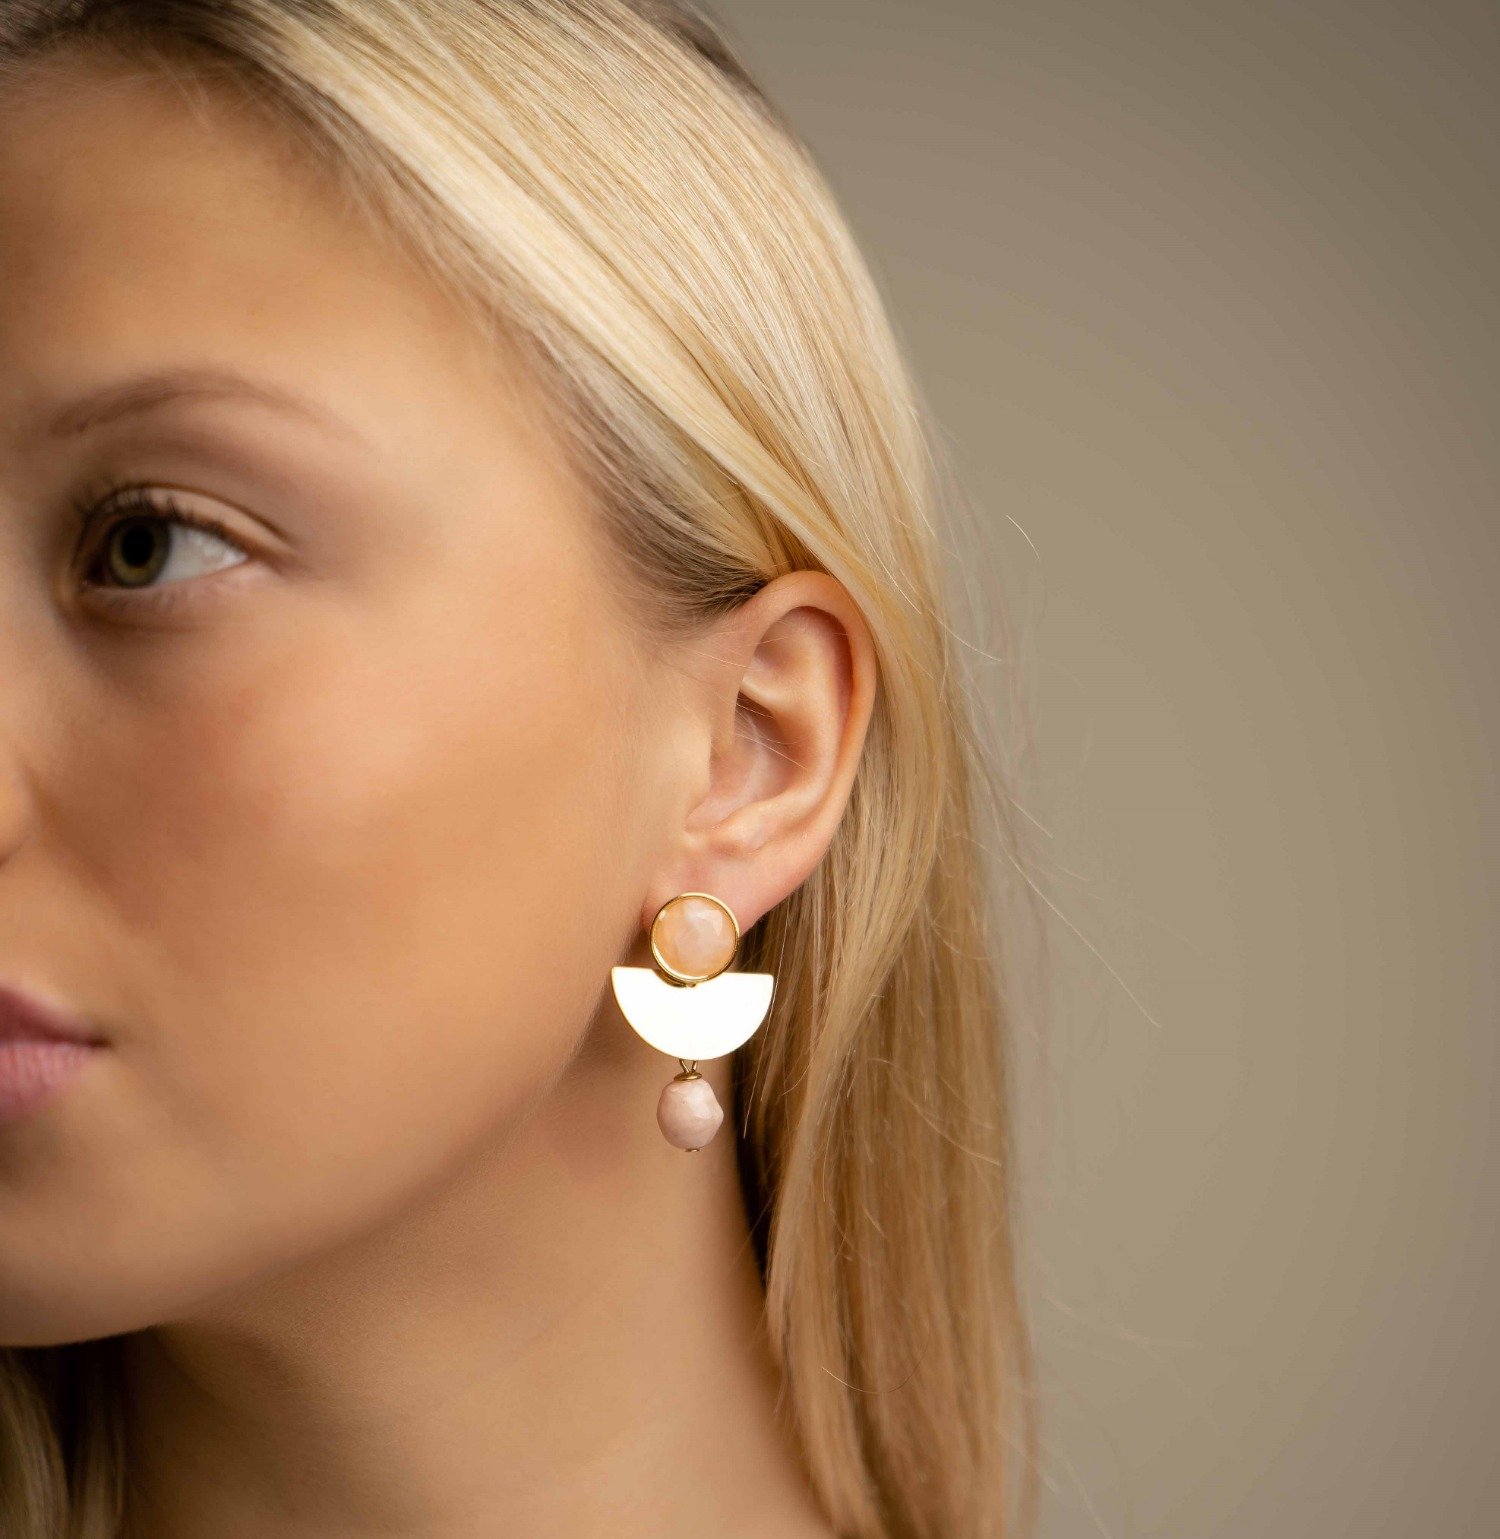 Athena nude earrings